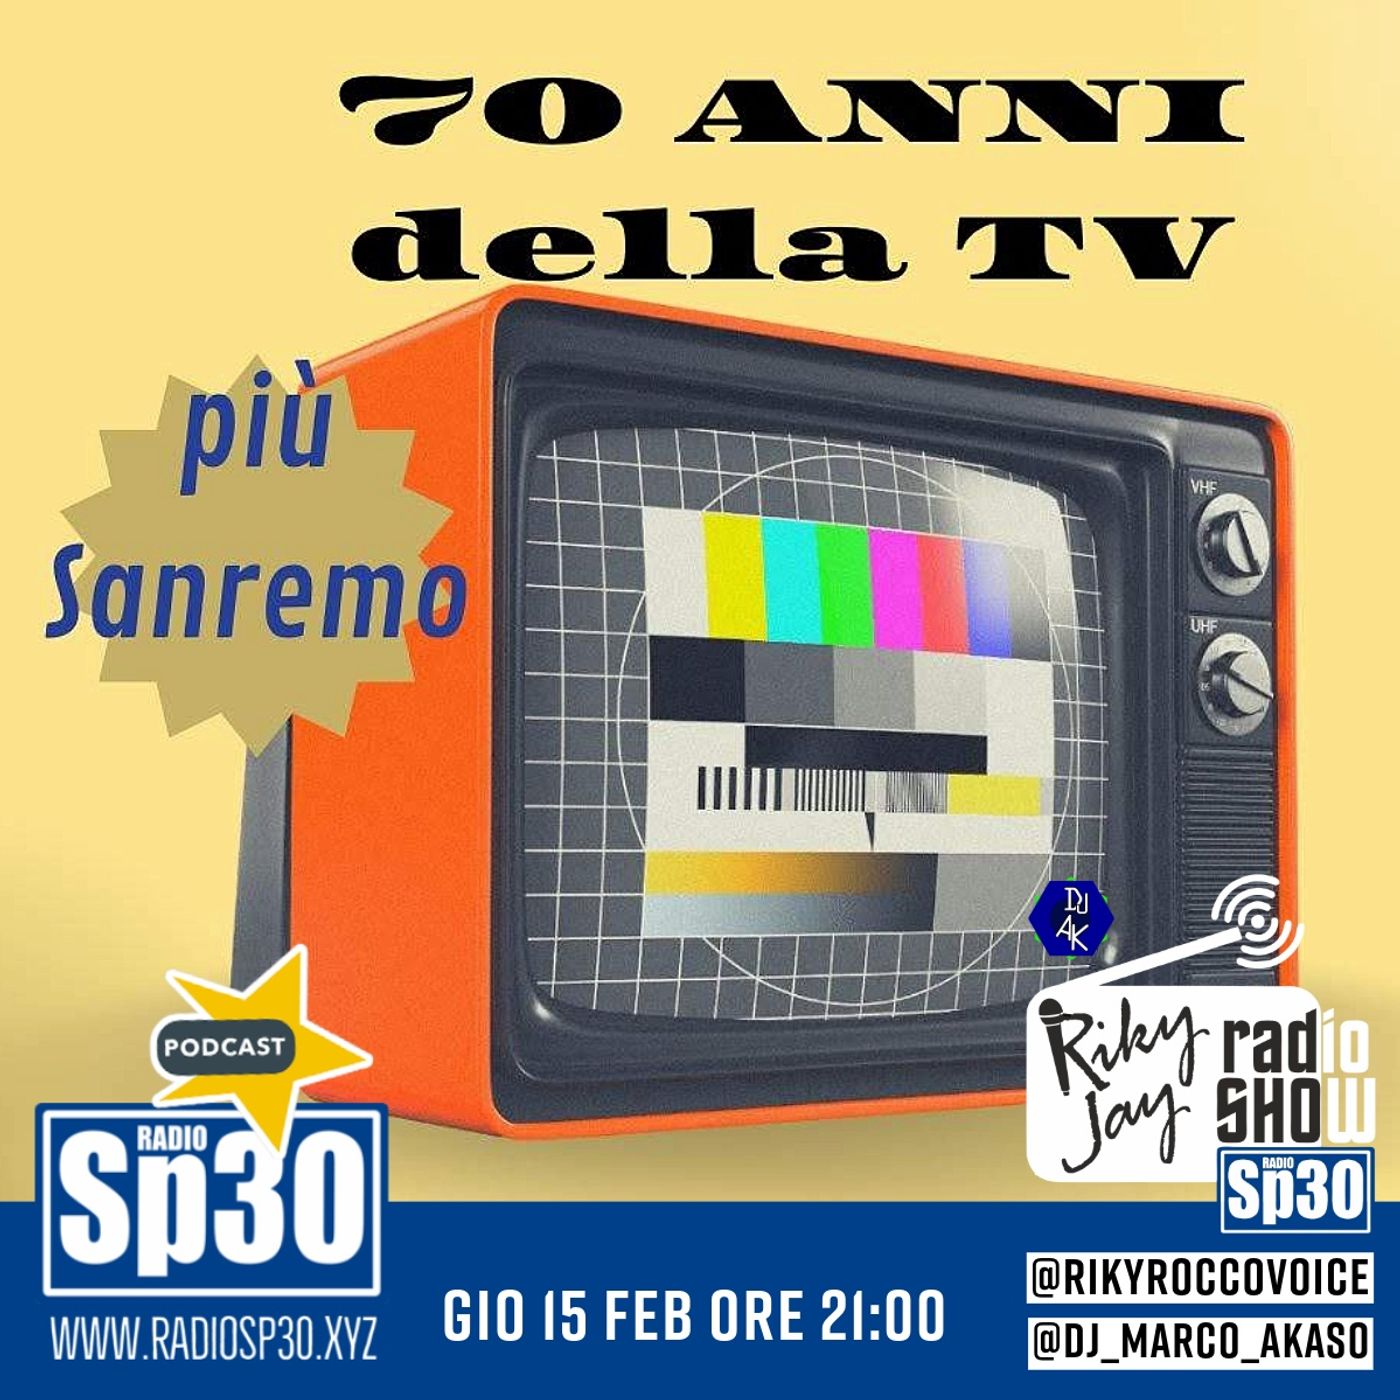 RikyJay Radio Show - ST.5 N.19 - Storia della TV piu Sanremo